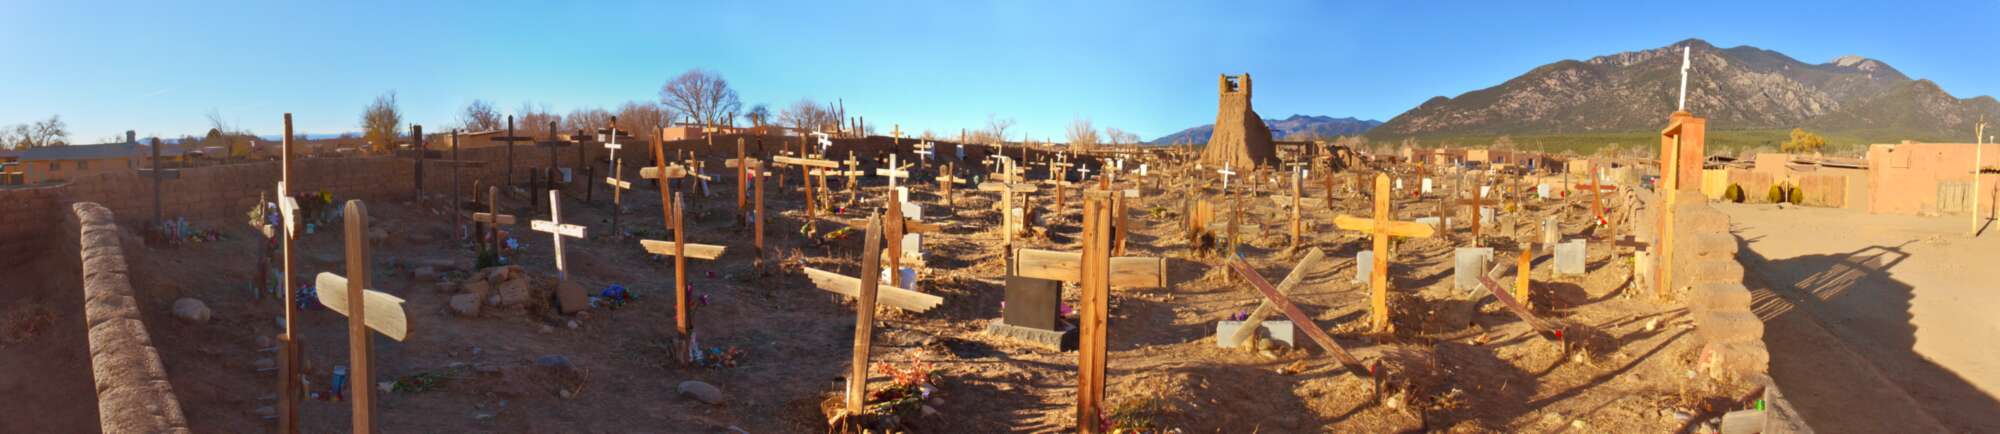 Taos Pueblo Cemetery Crosses